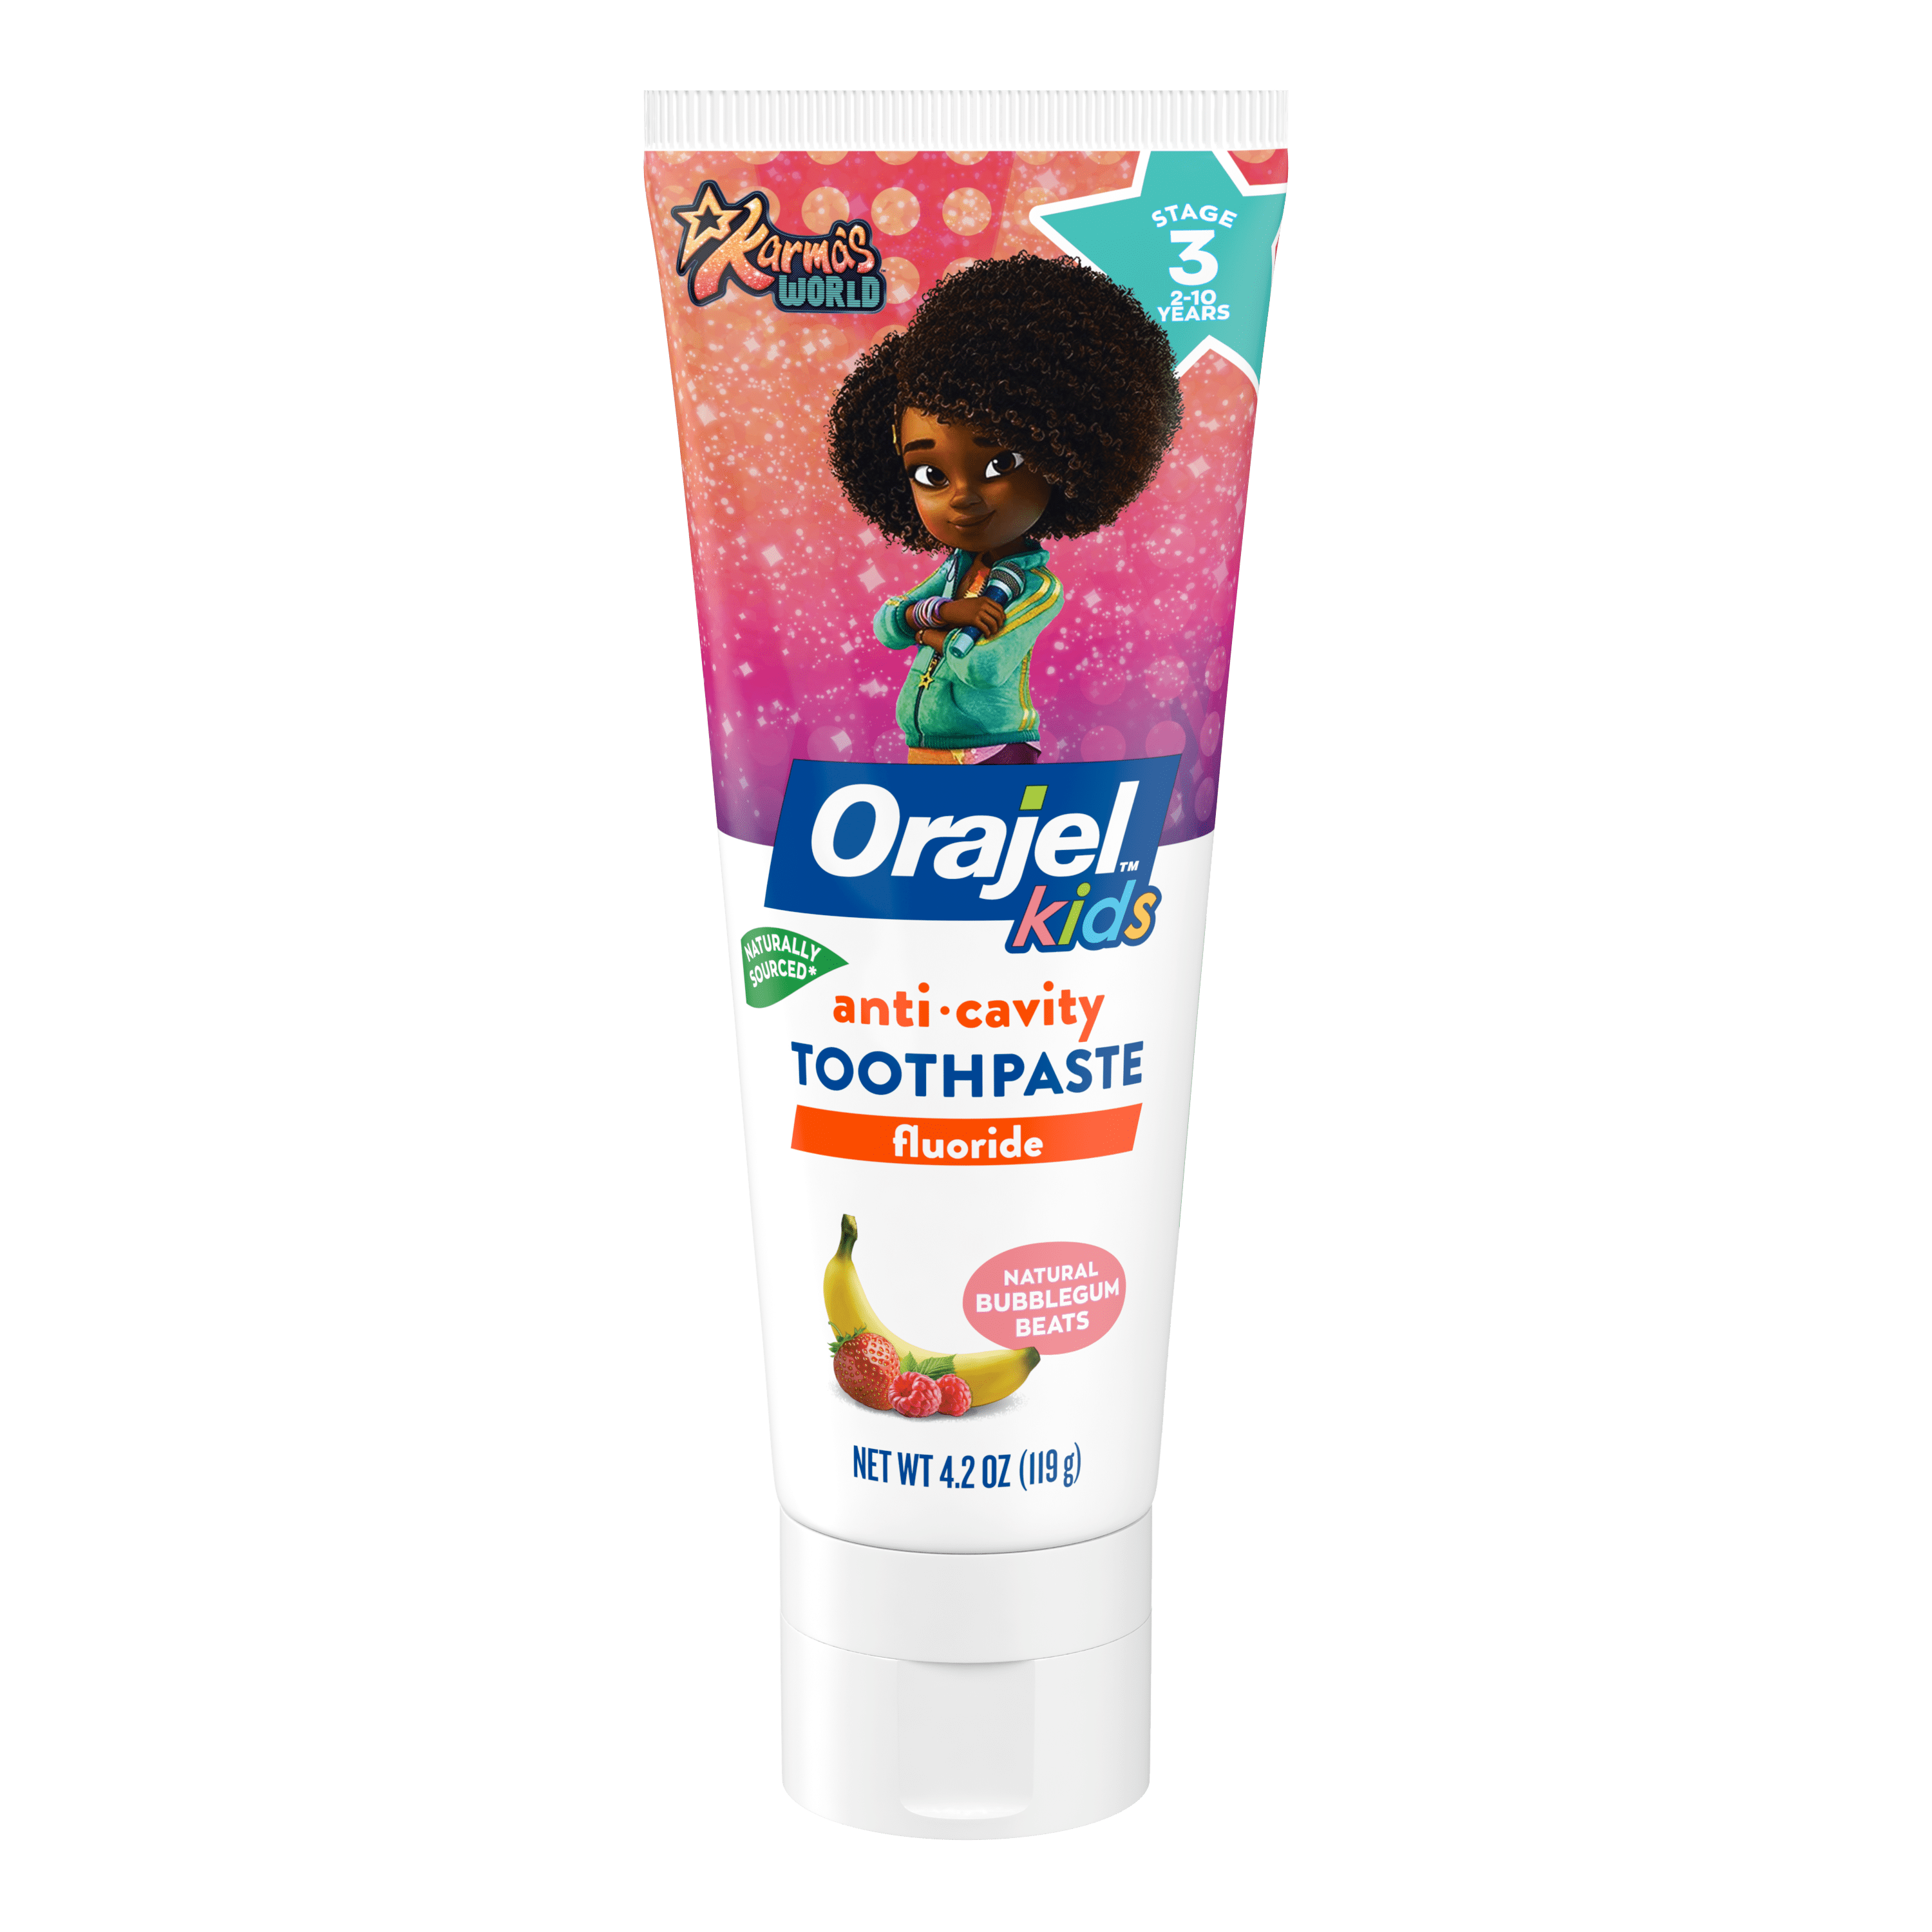 Orajel Kids Karmas World Anti-Cavity Fluoride Toothpaste, Natural Bubblegum Beats, 4.2oz Tube